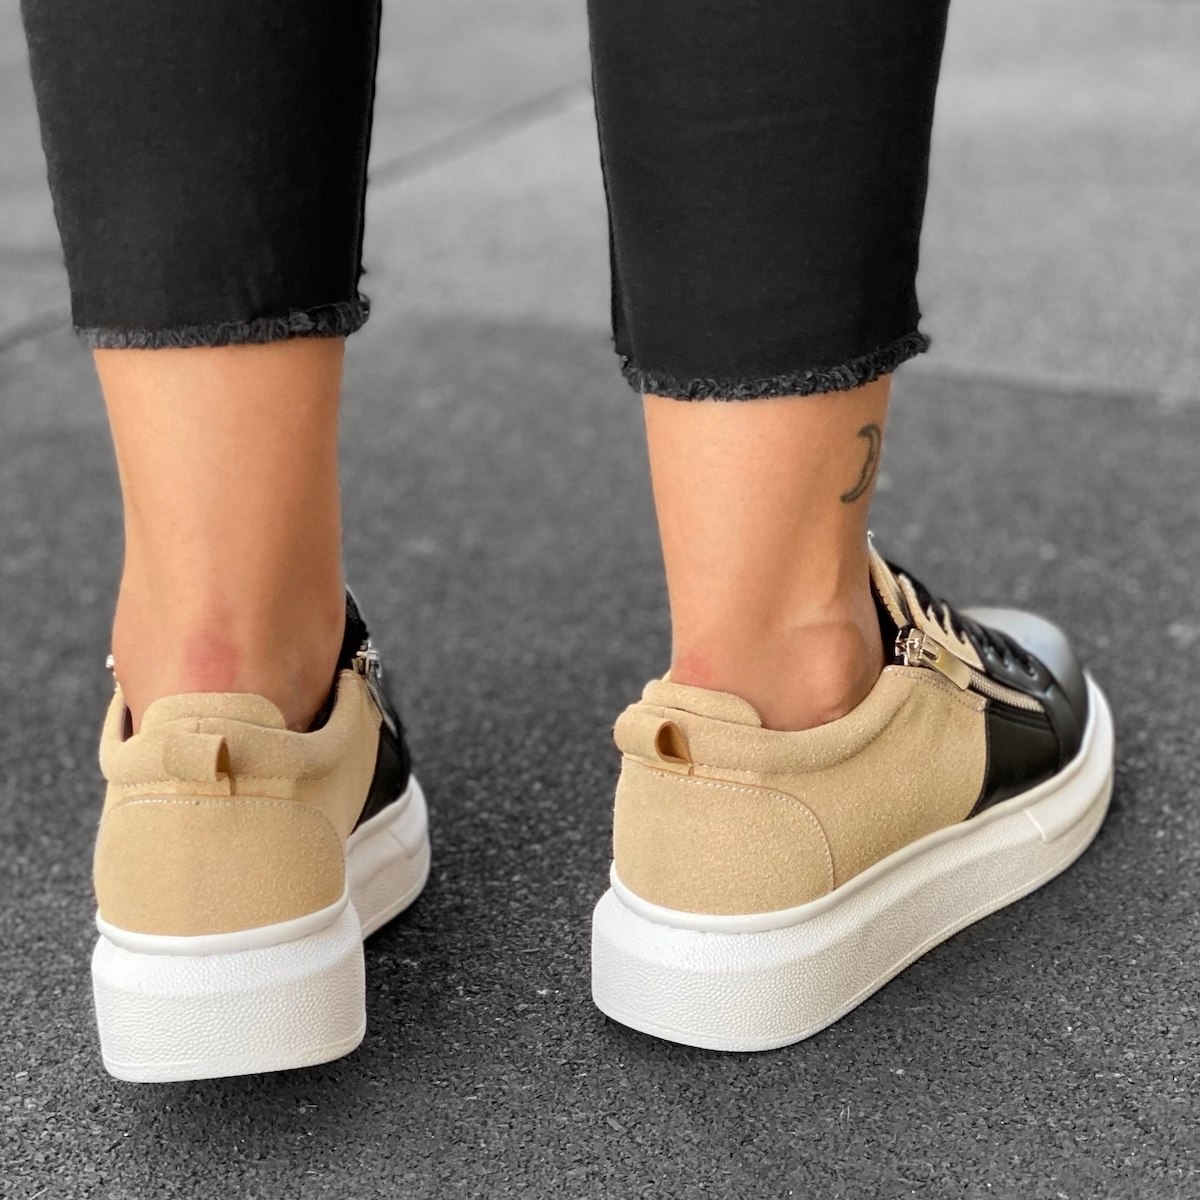 Women's Hype Sole Zipped Style Sneakers In Cream-Black | Martin Valen